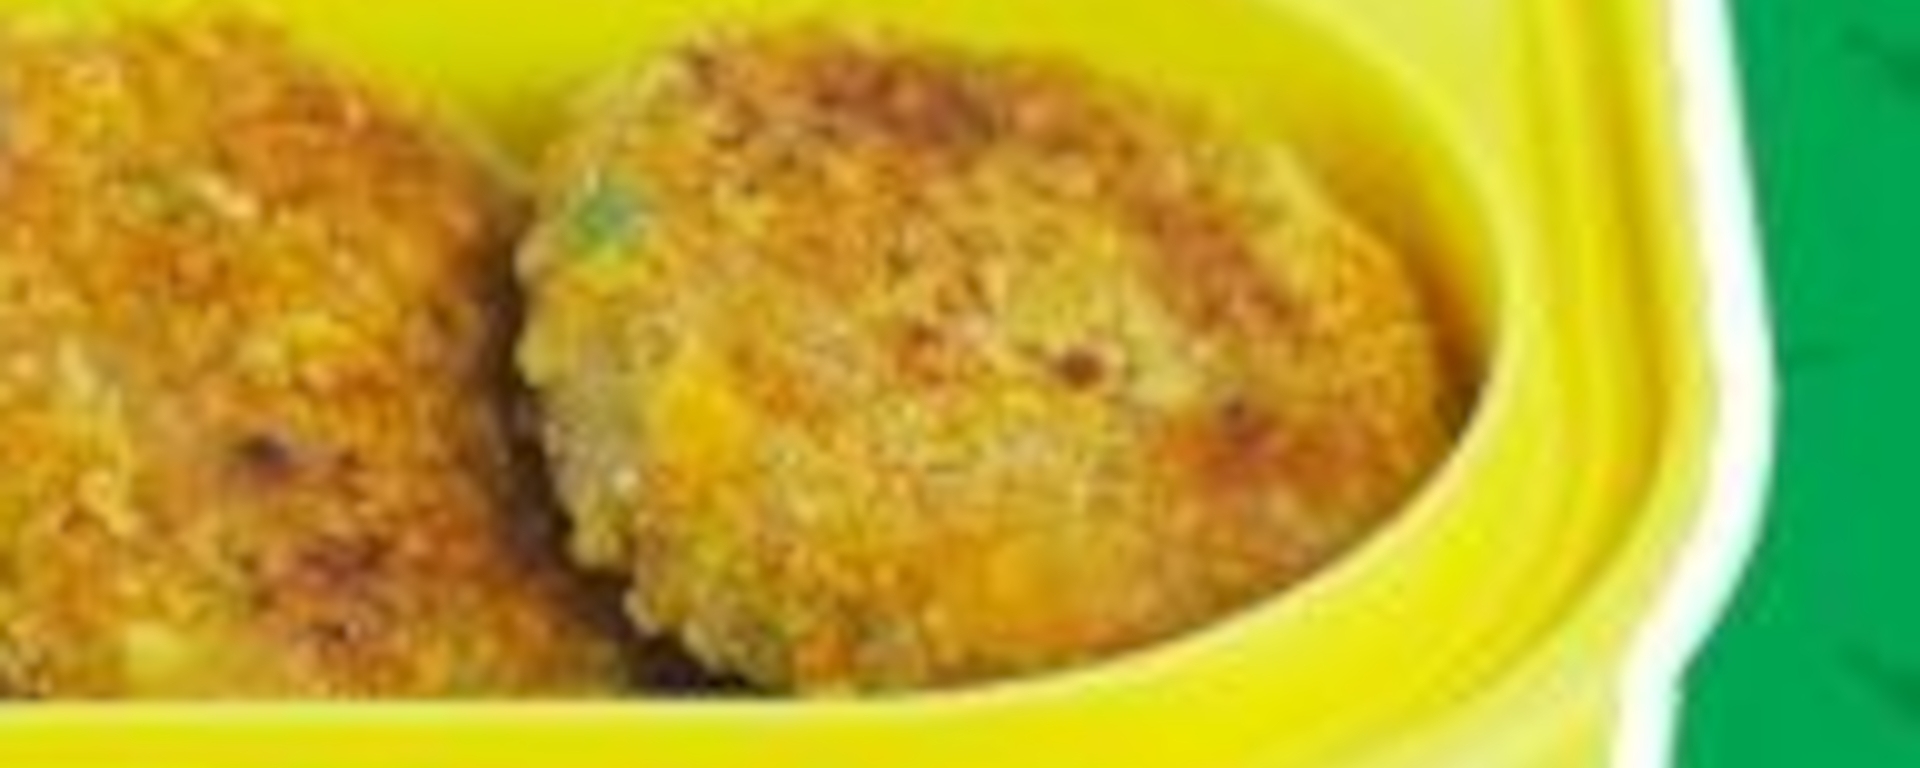 LuvMyRecipe.com - Sweet Potato and Quinoa Patties Featured